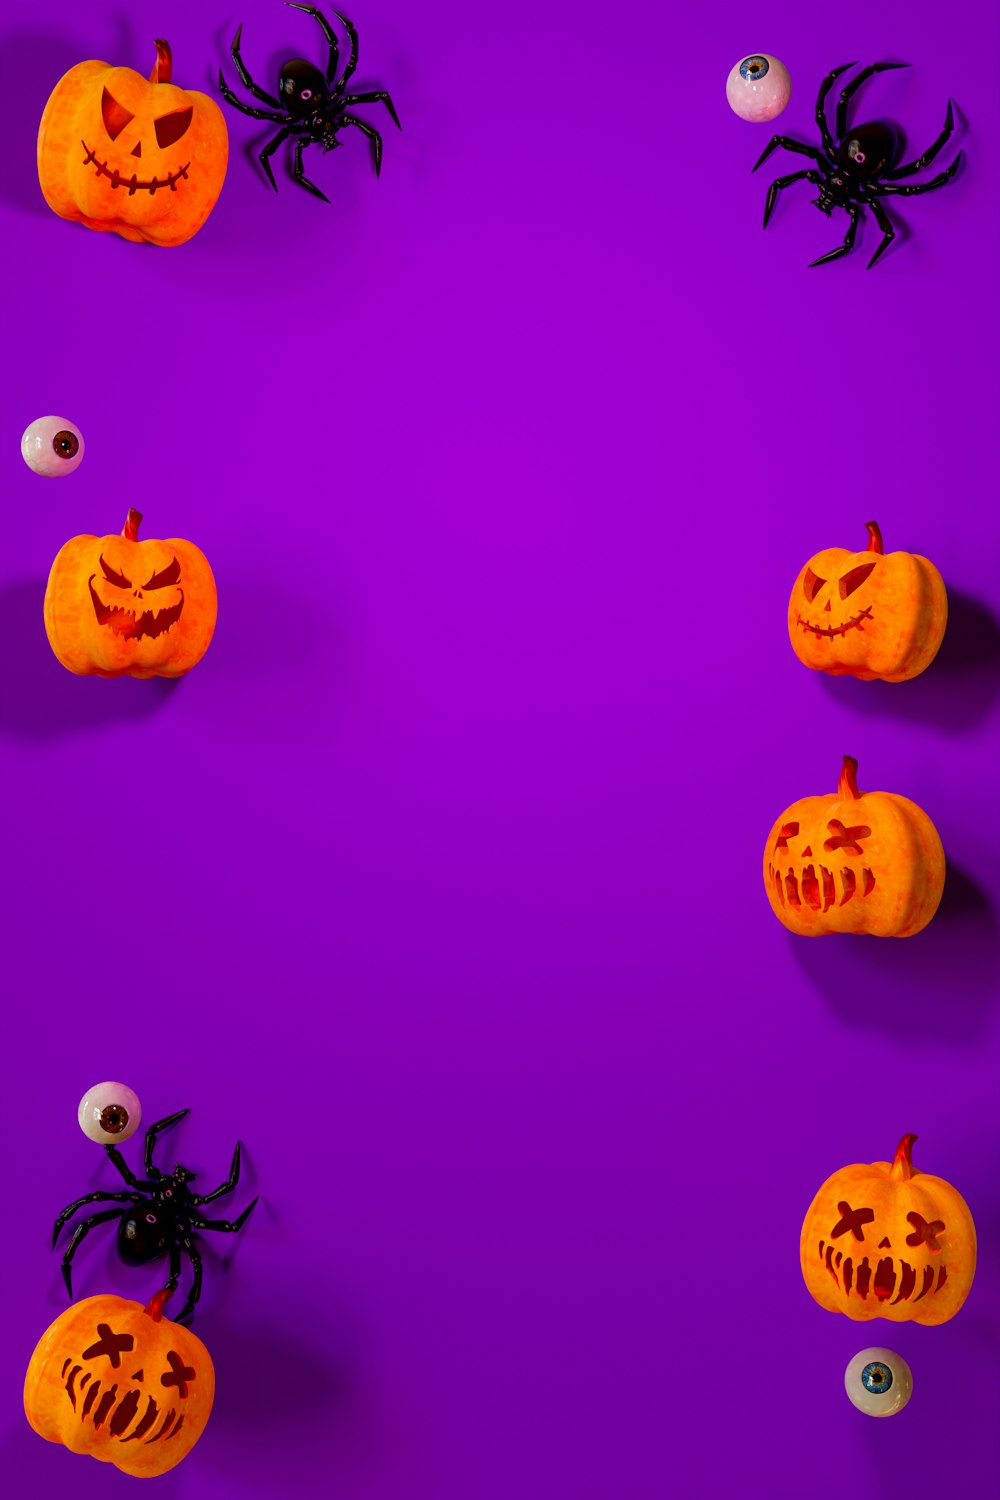 Fondos de pantalla de Halloween: Descarga HD gratuita [500+ HQ] | Unsplash